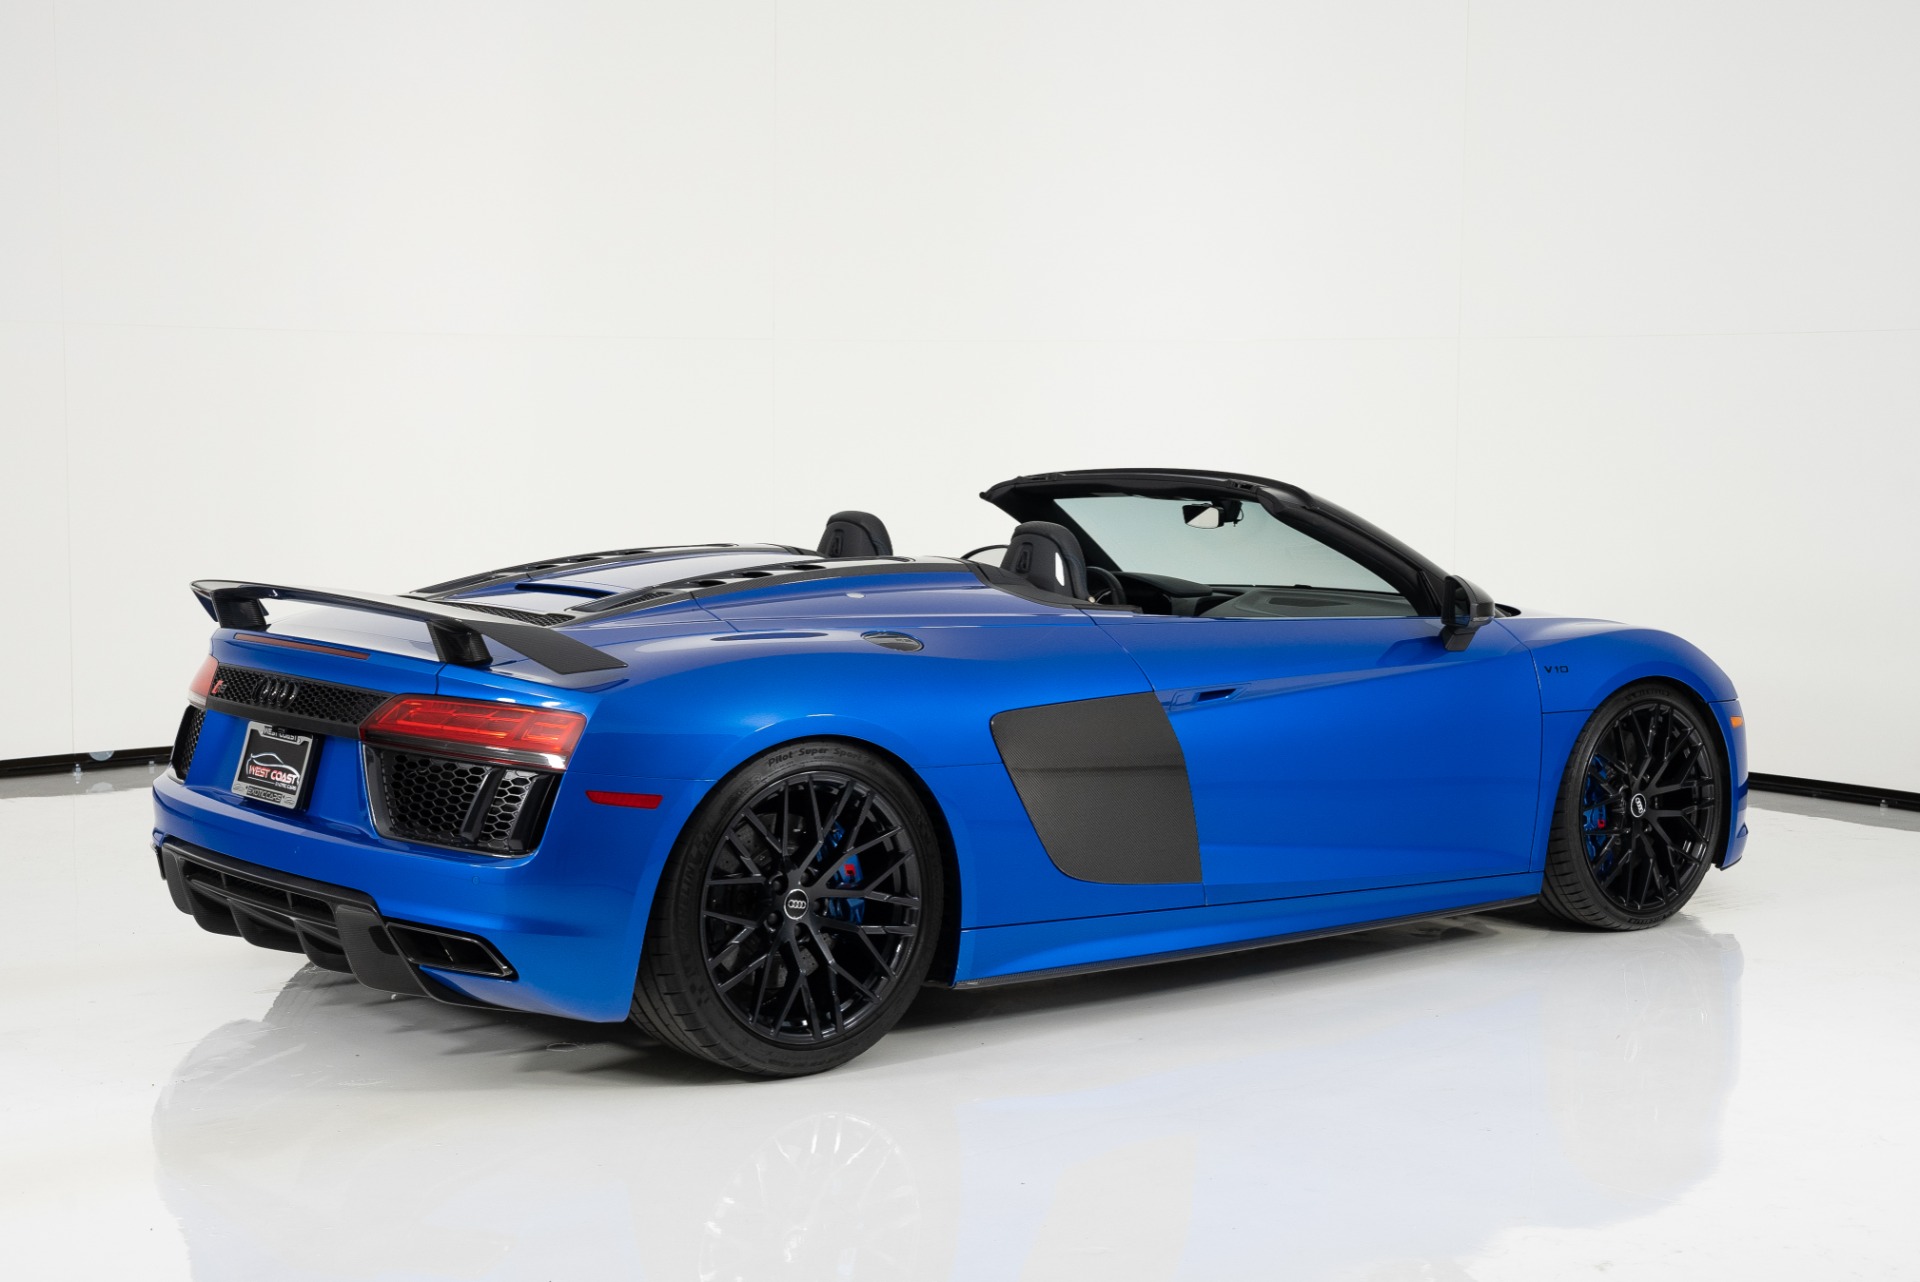 Powder Blue Audi R8  Best luxury cars, Luxury cars audi, Audi cars